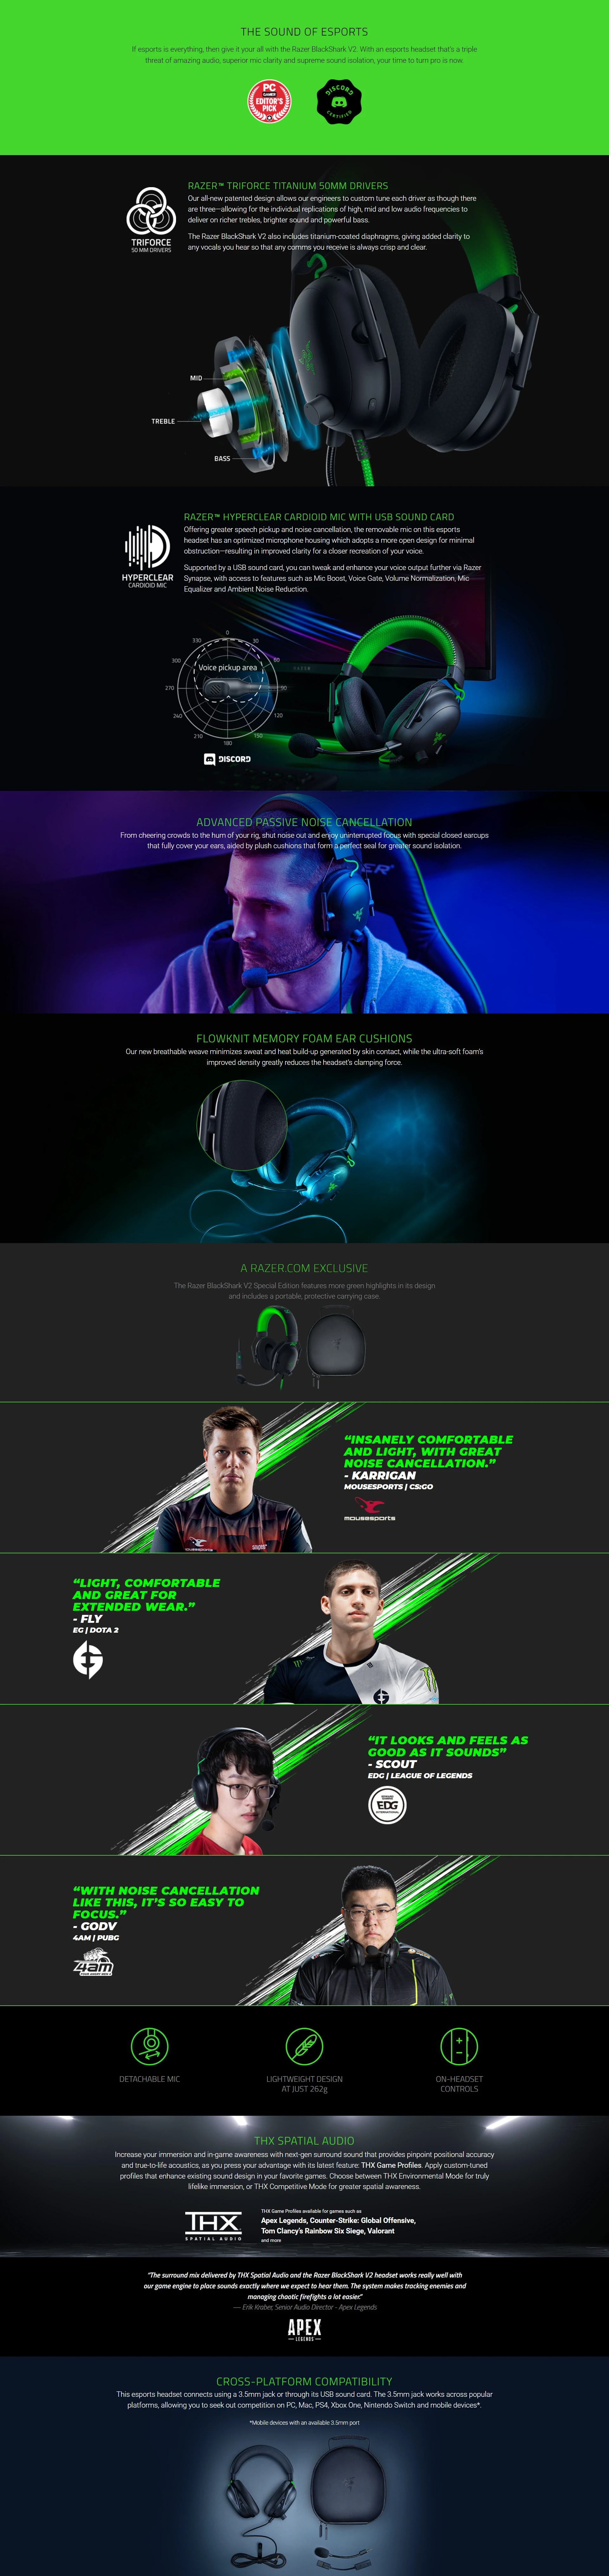 Overview - Razer BlackShark V2 Multi-Platform Wired E-sports Headset - Special Edition